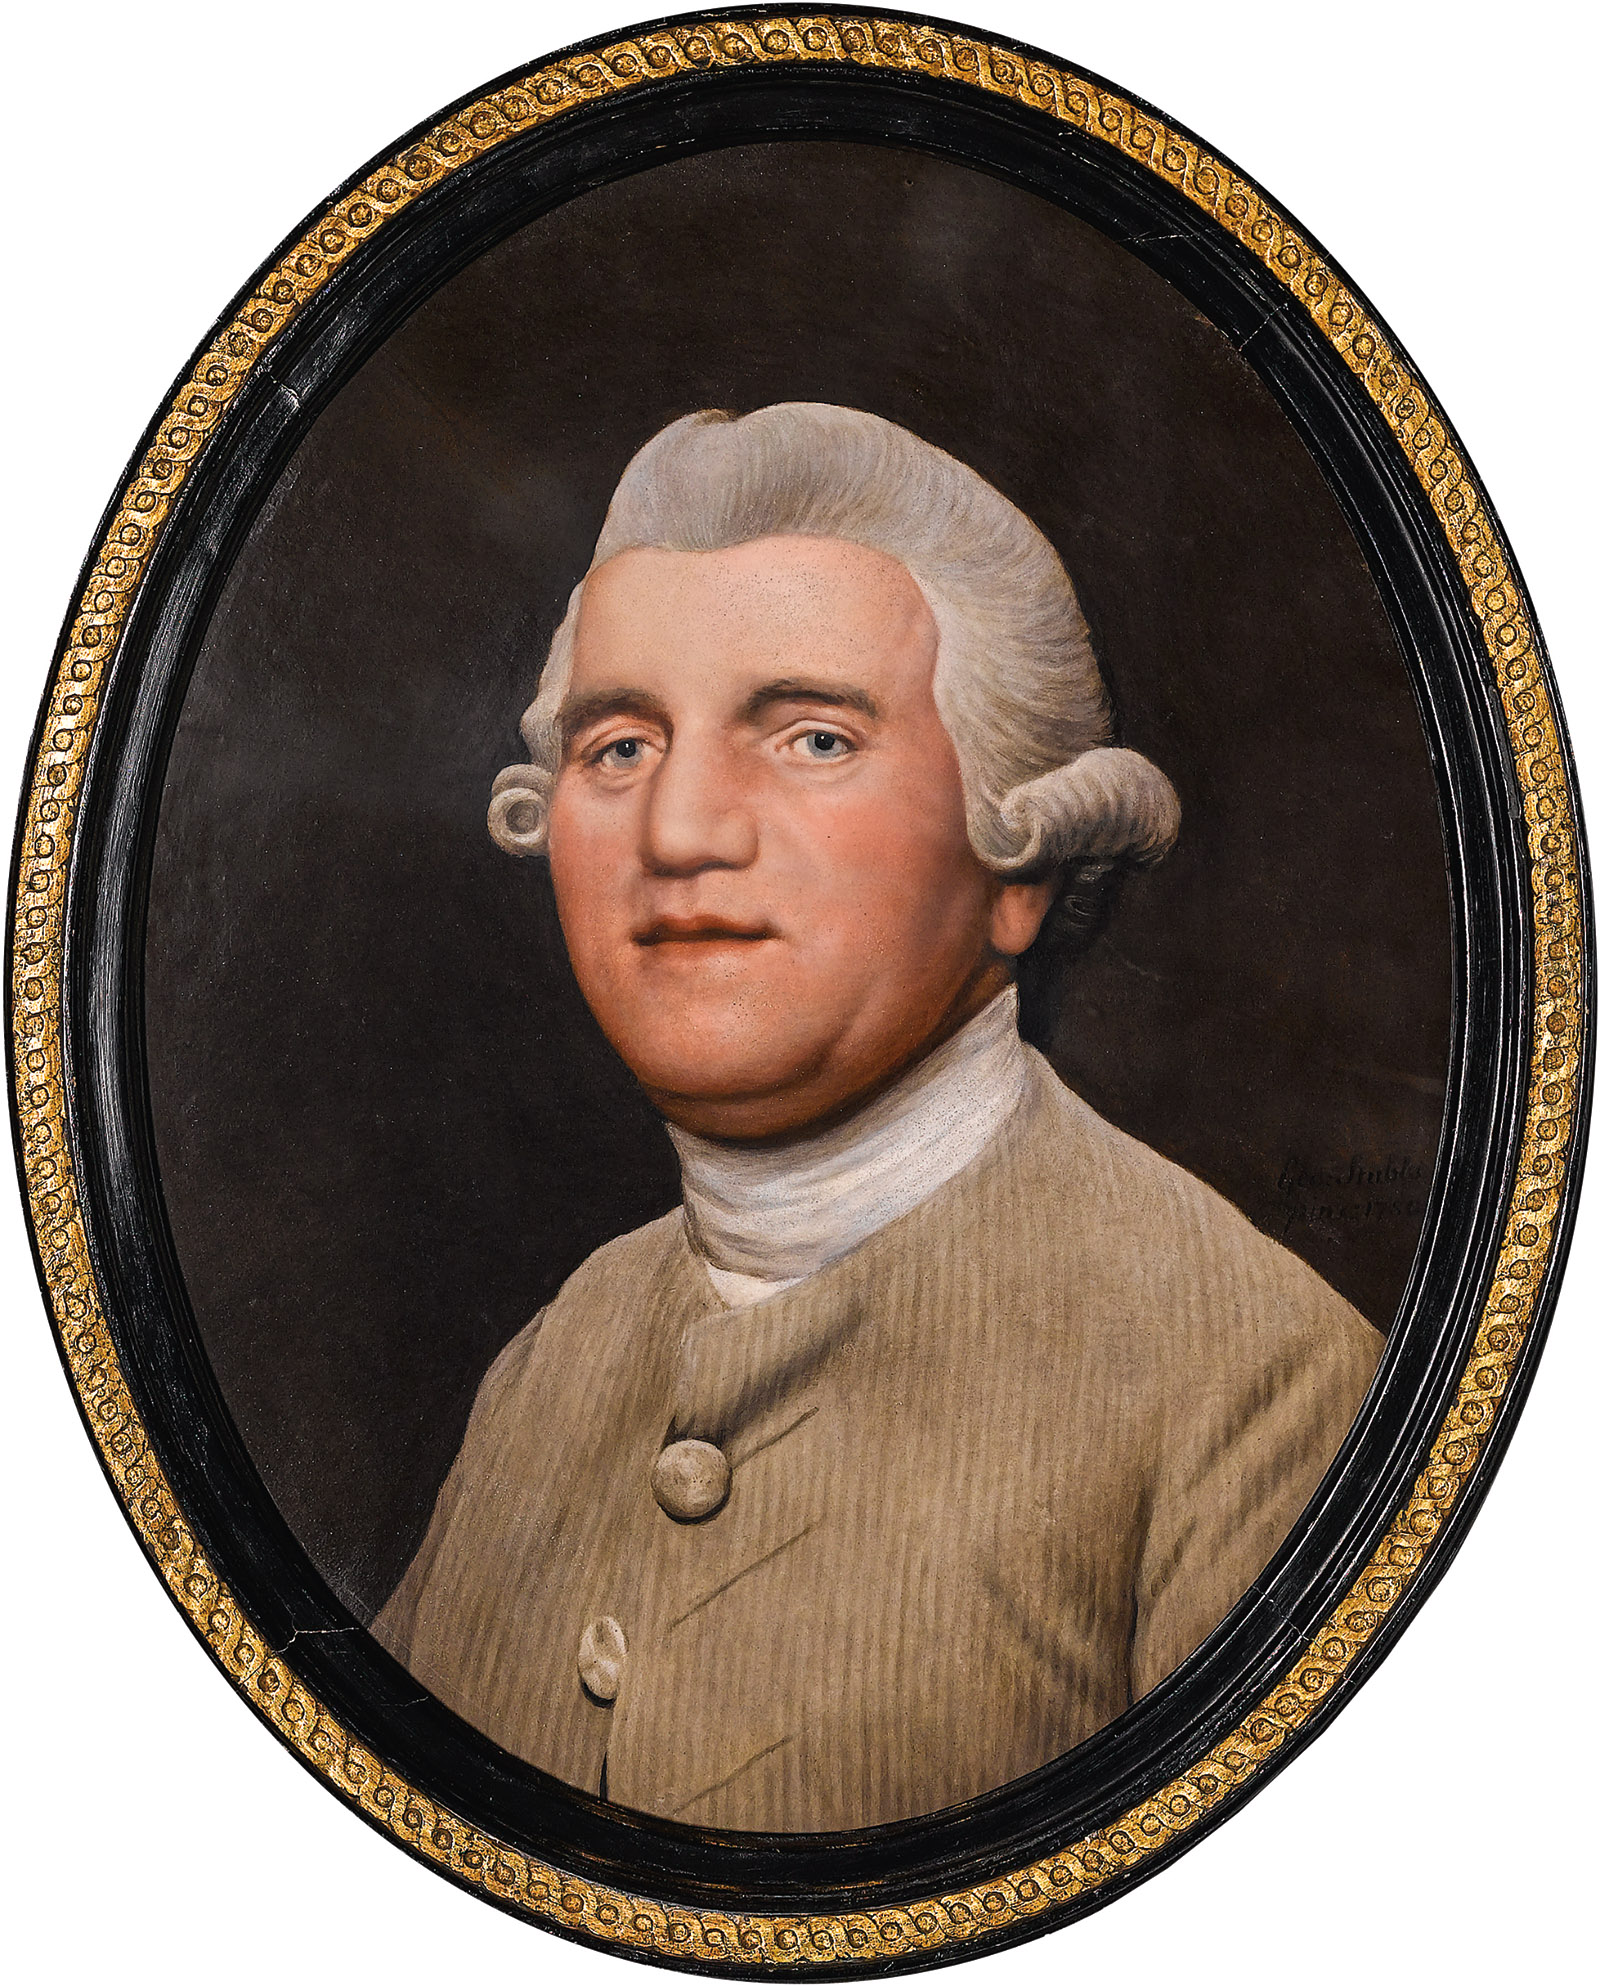 Josiah Wedgwood; enamel portrait by George Stubbs on a Wedgwood ceramic tablet